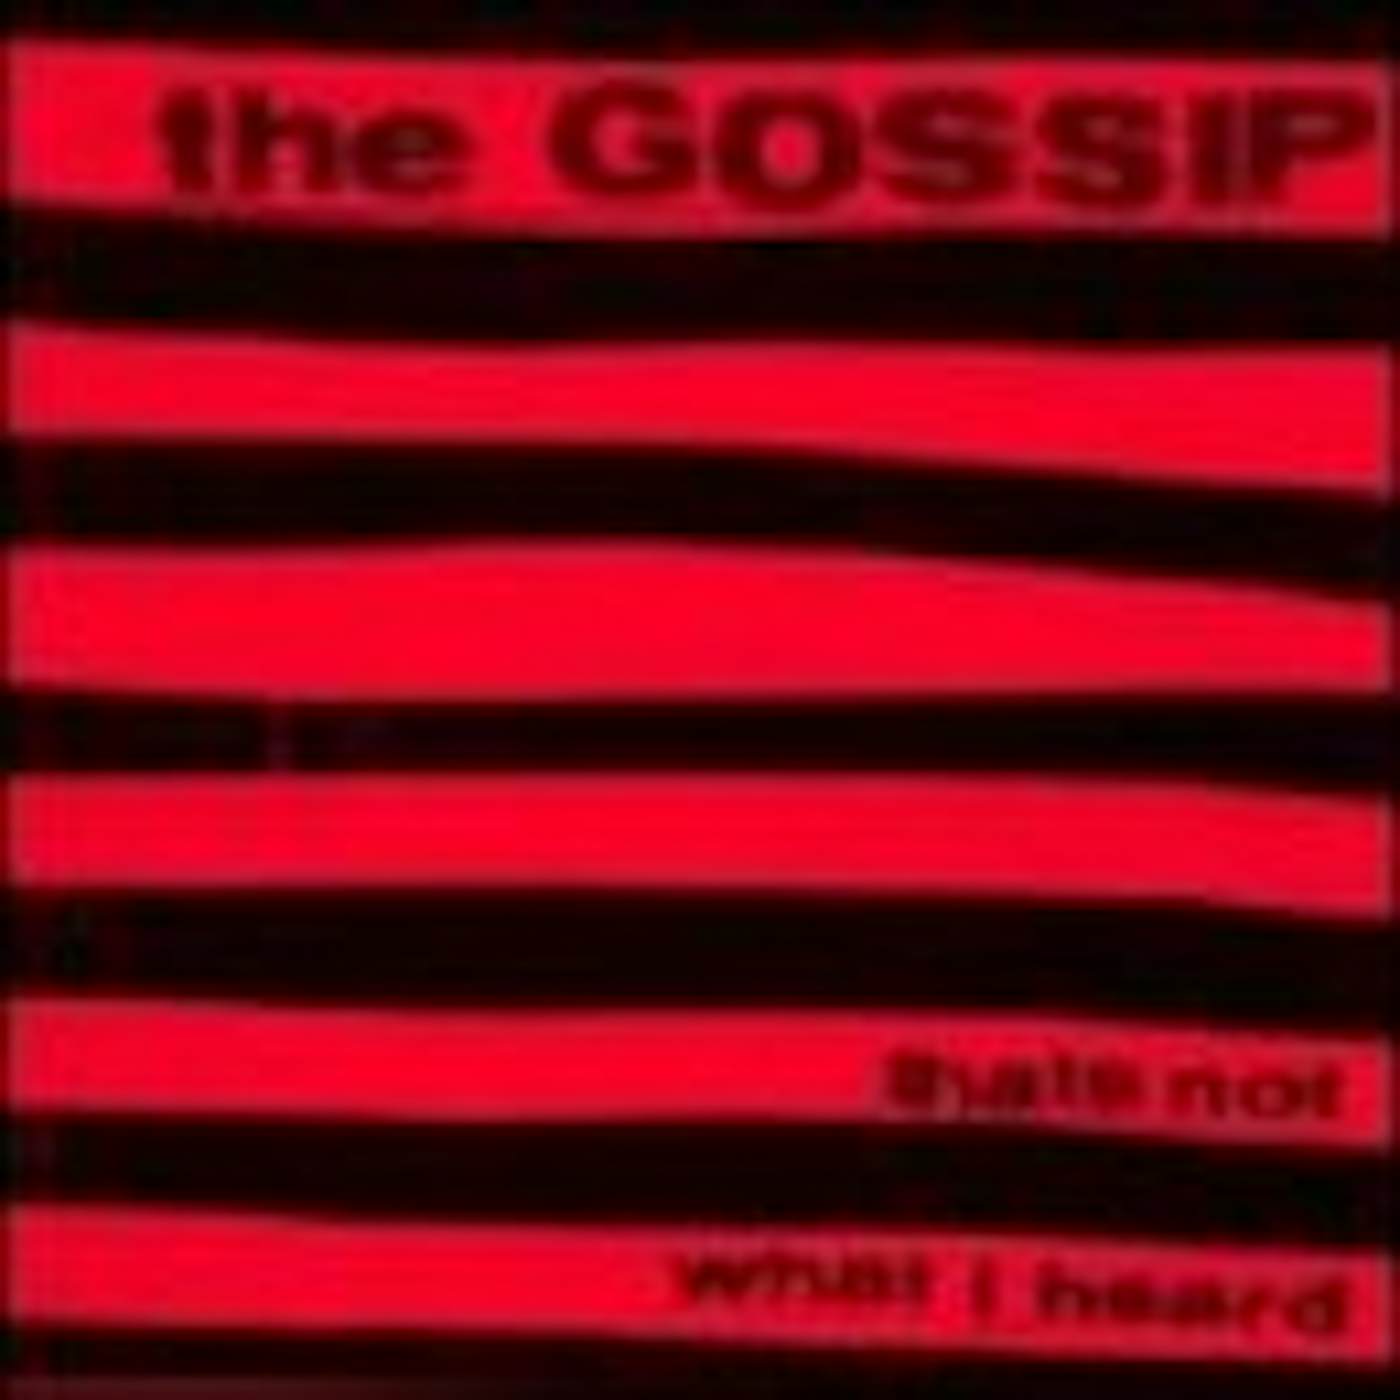 Gossip That's Not What I Heard Vinyl Record